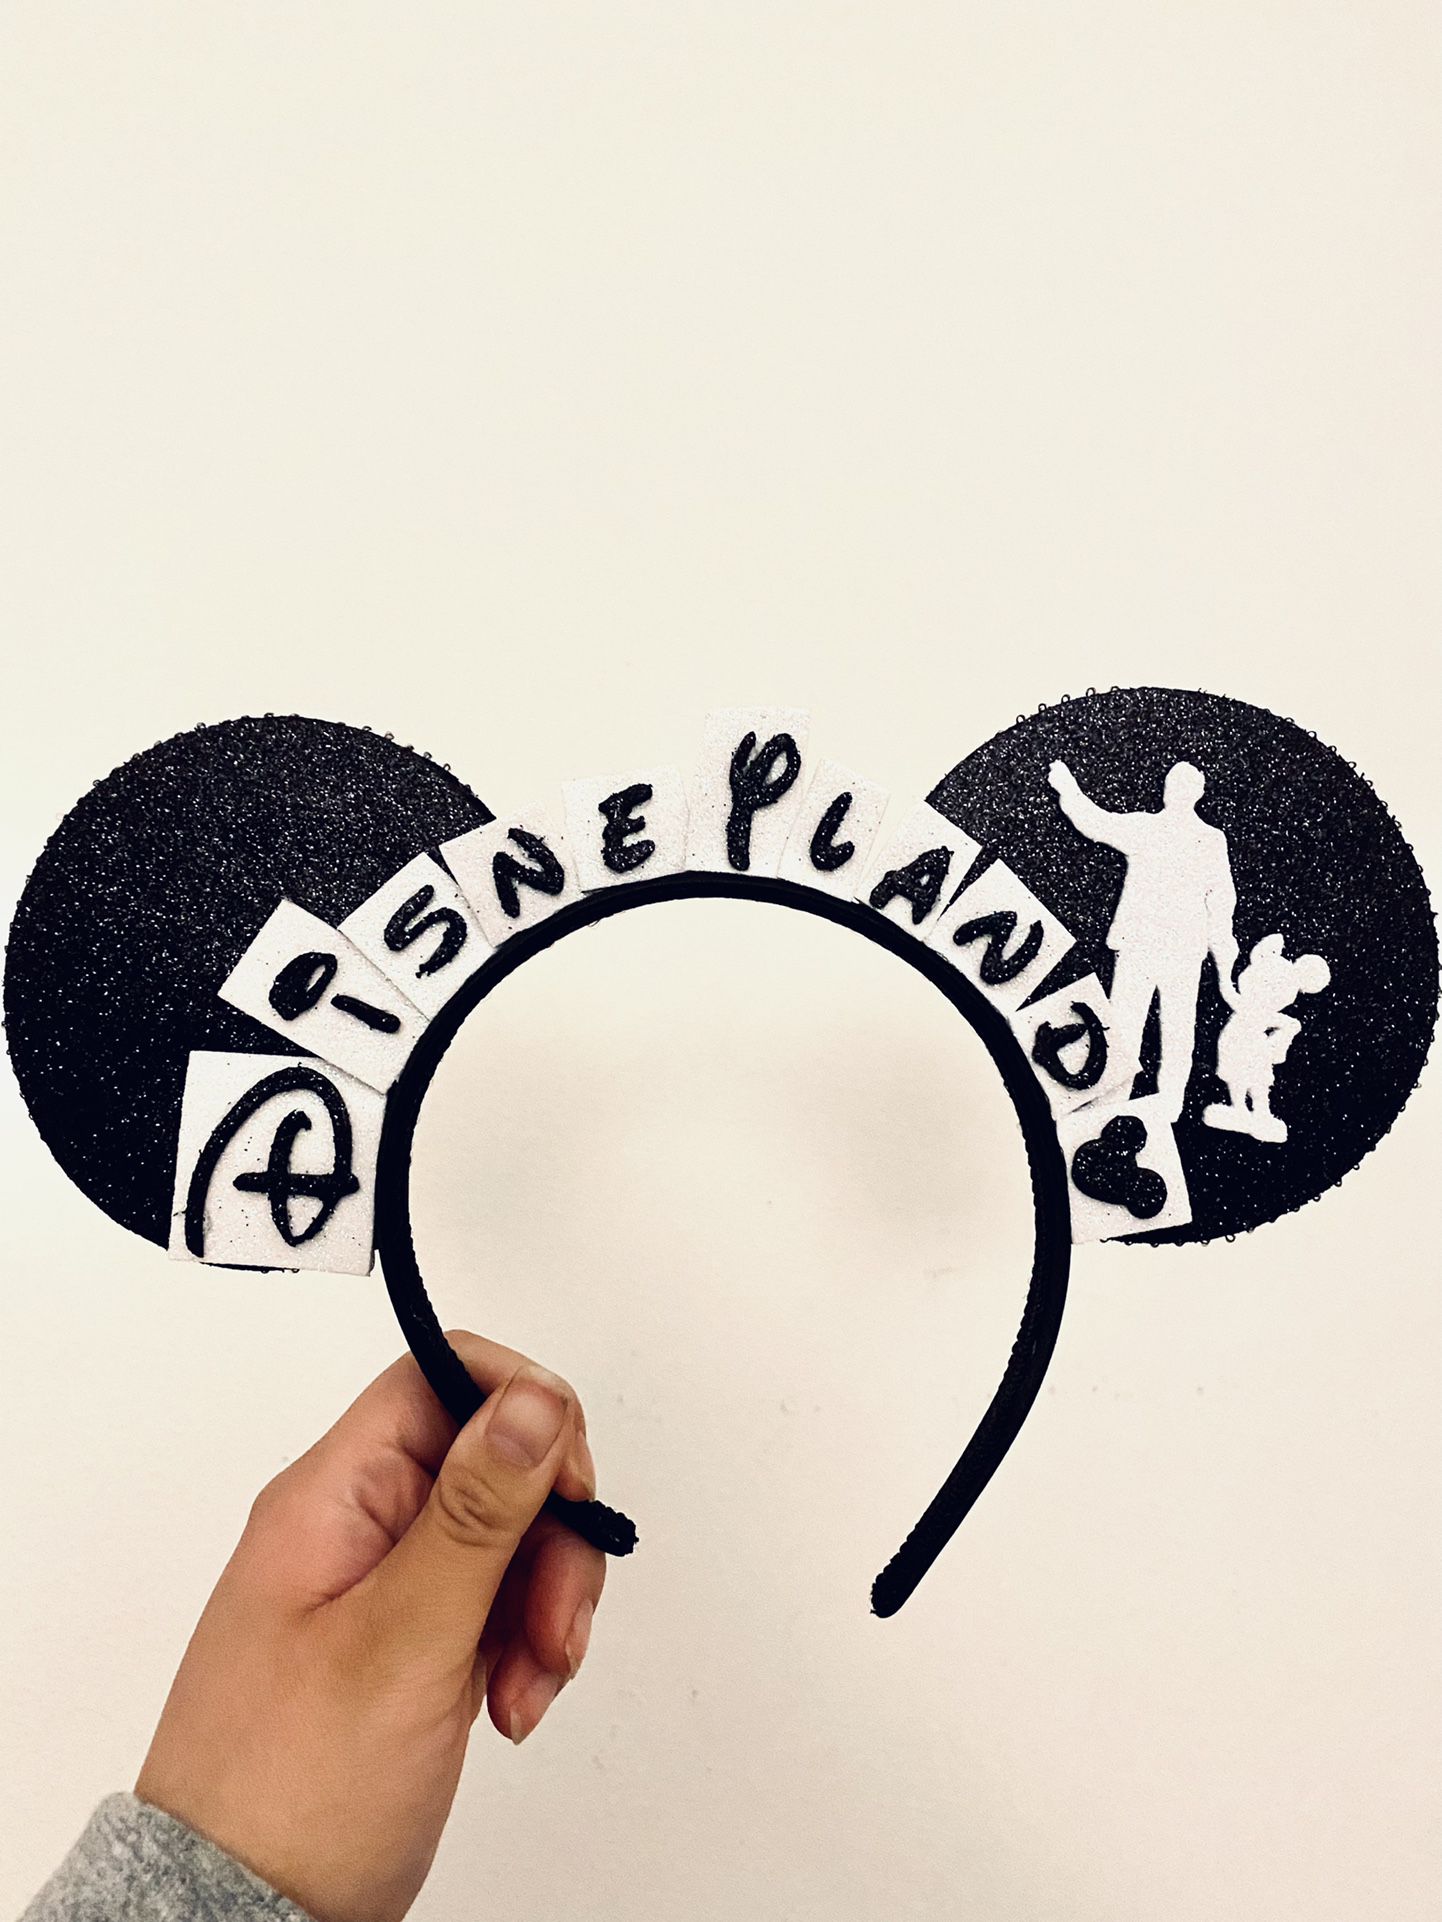 Retro Disneyland Minnie Ears 